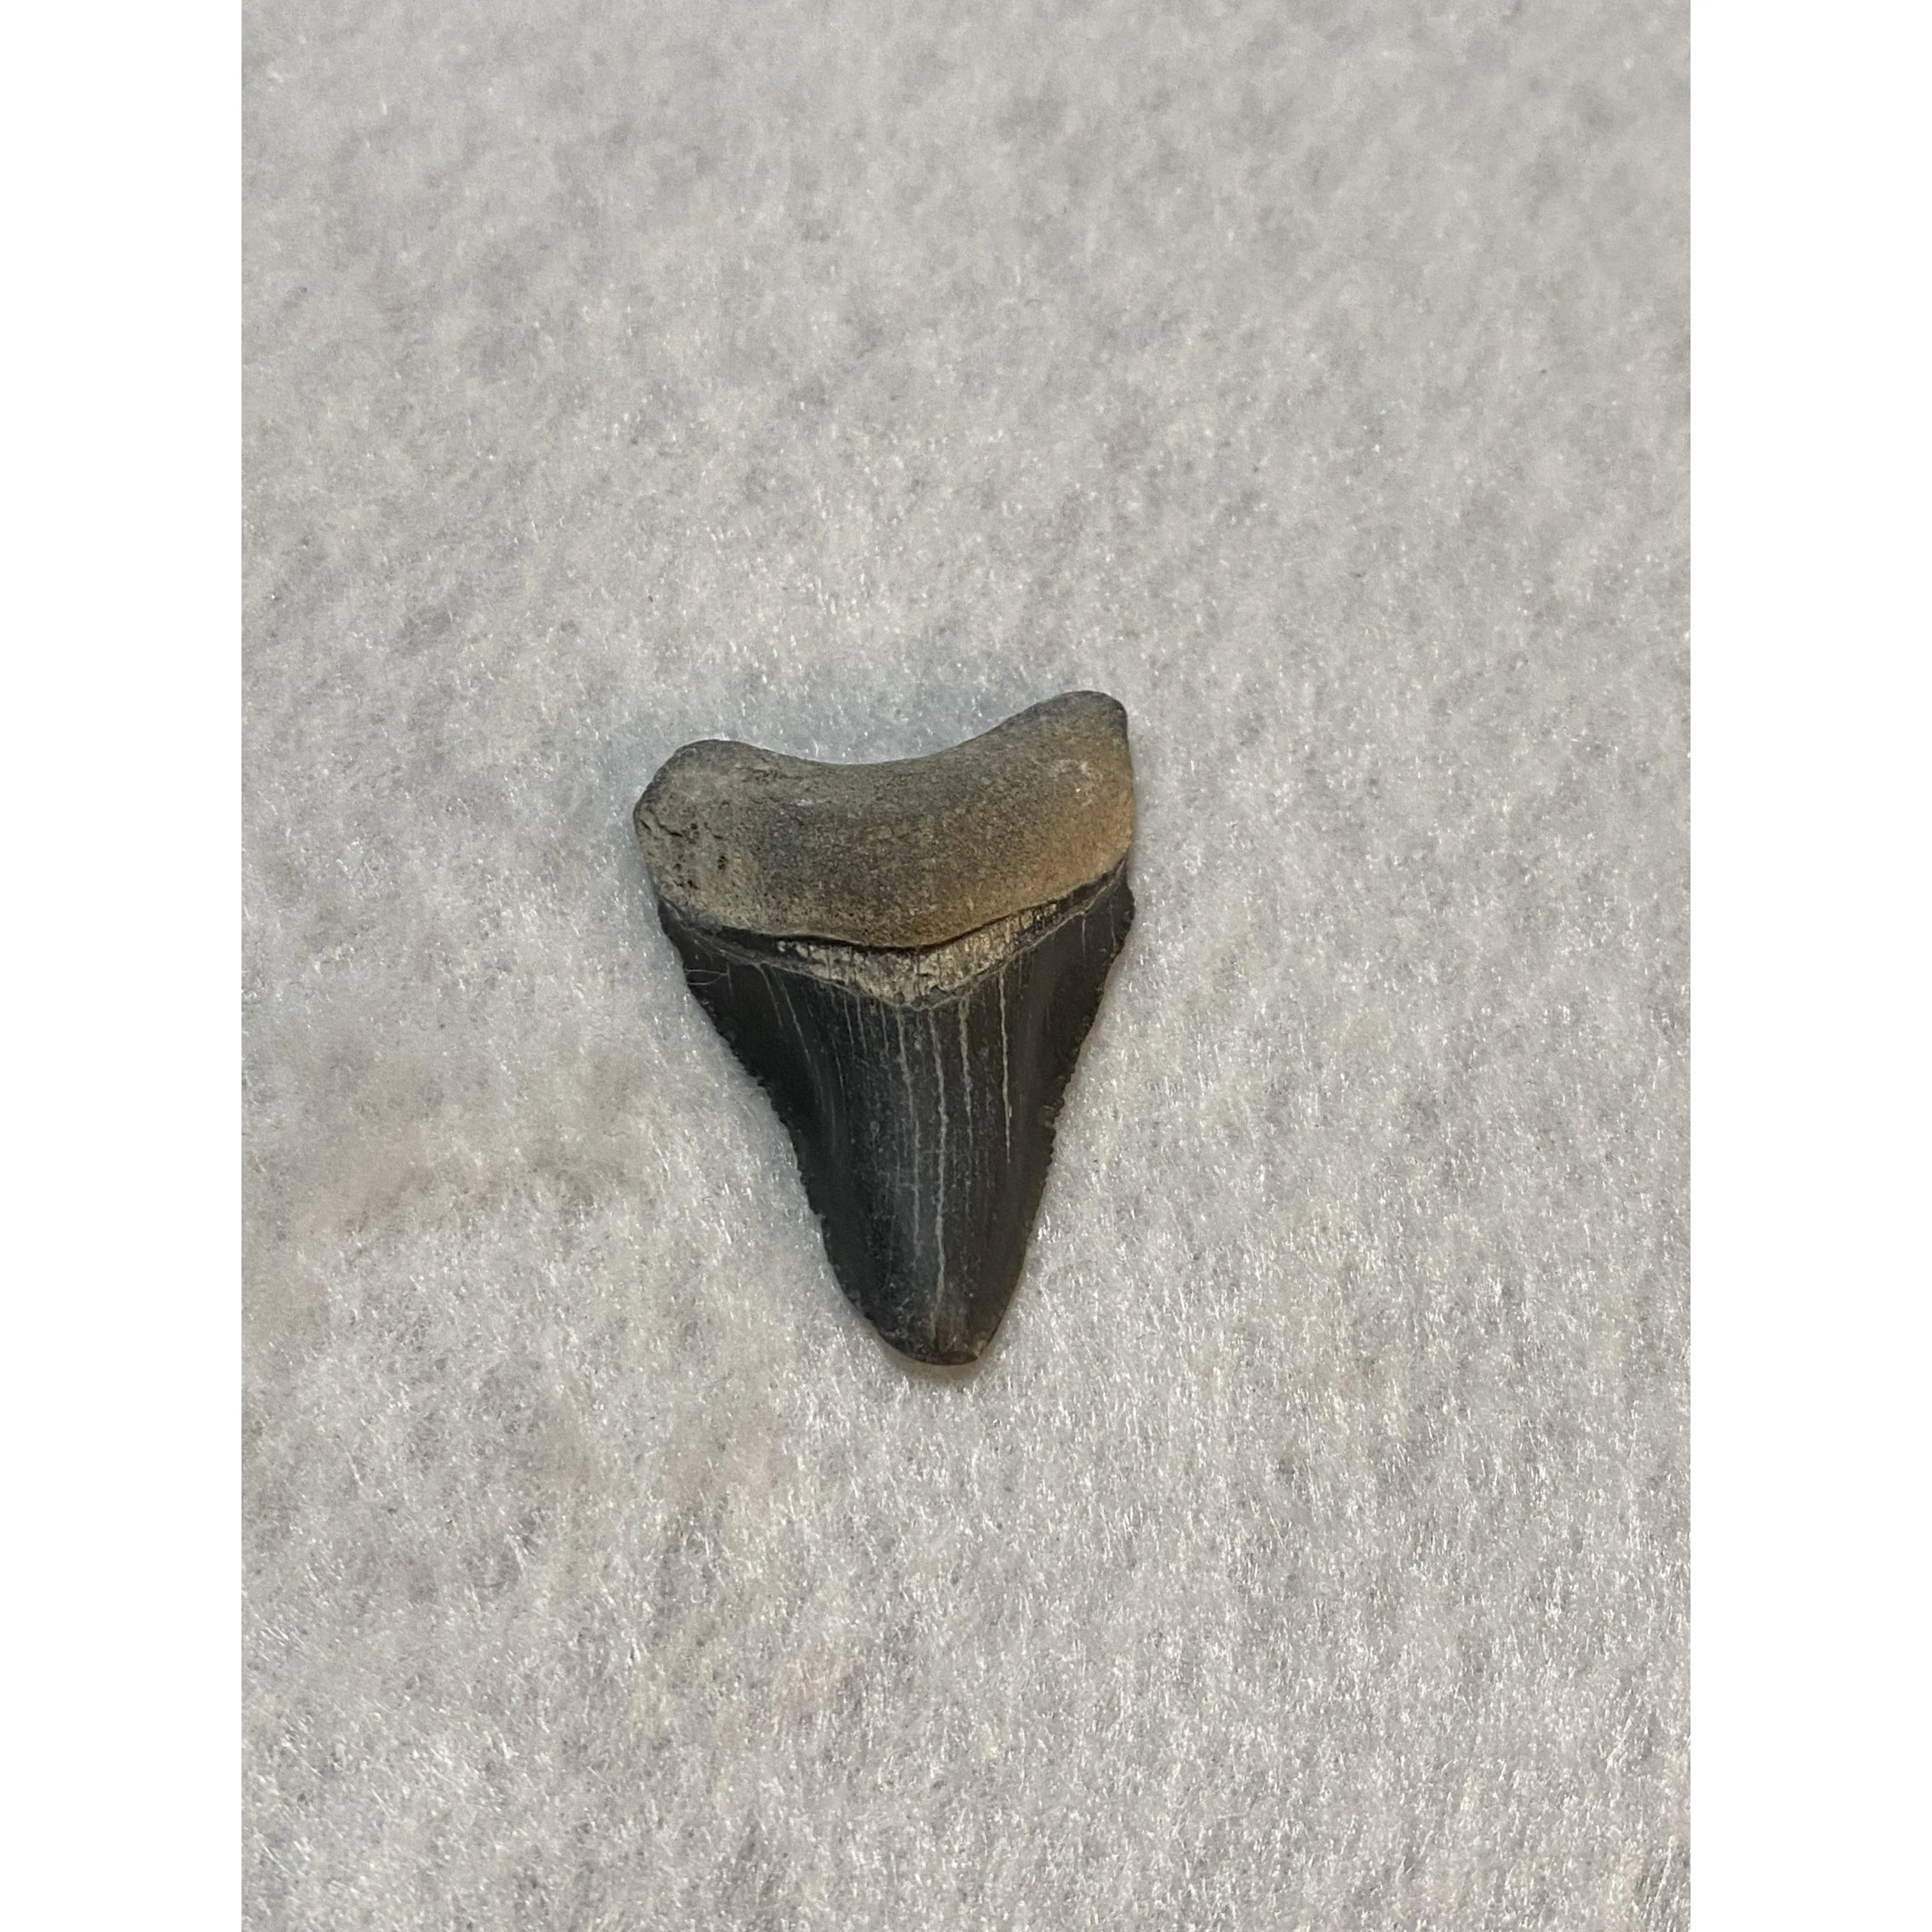 Megalodon Tooth, Bone Valley, Florida, 1.55 inch Prehistoric Online